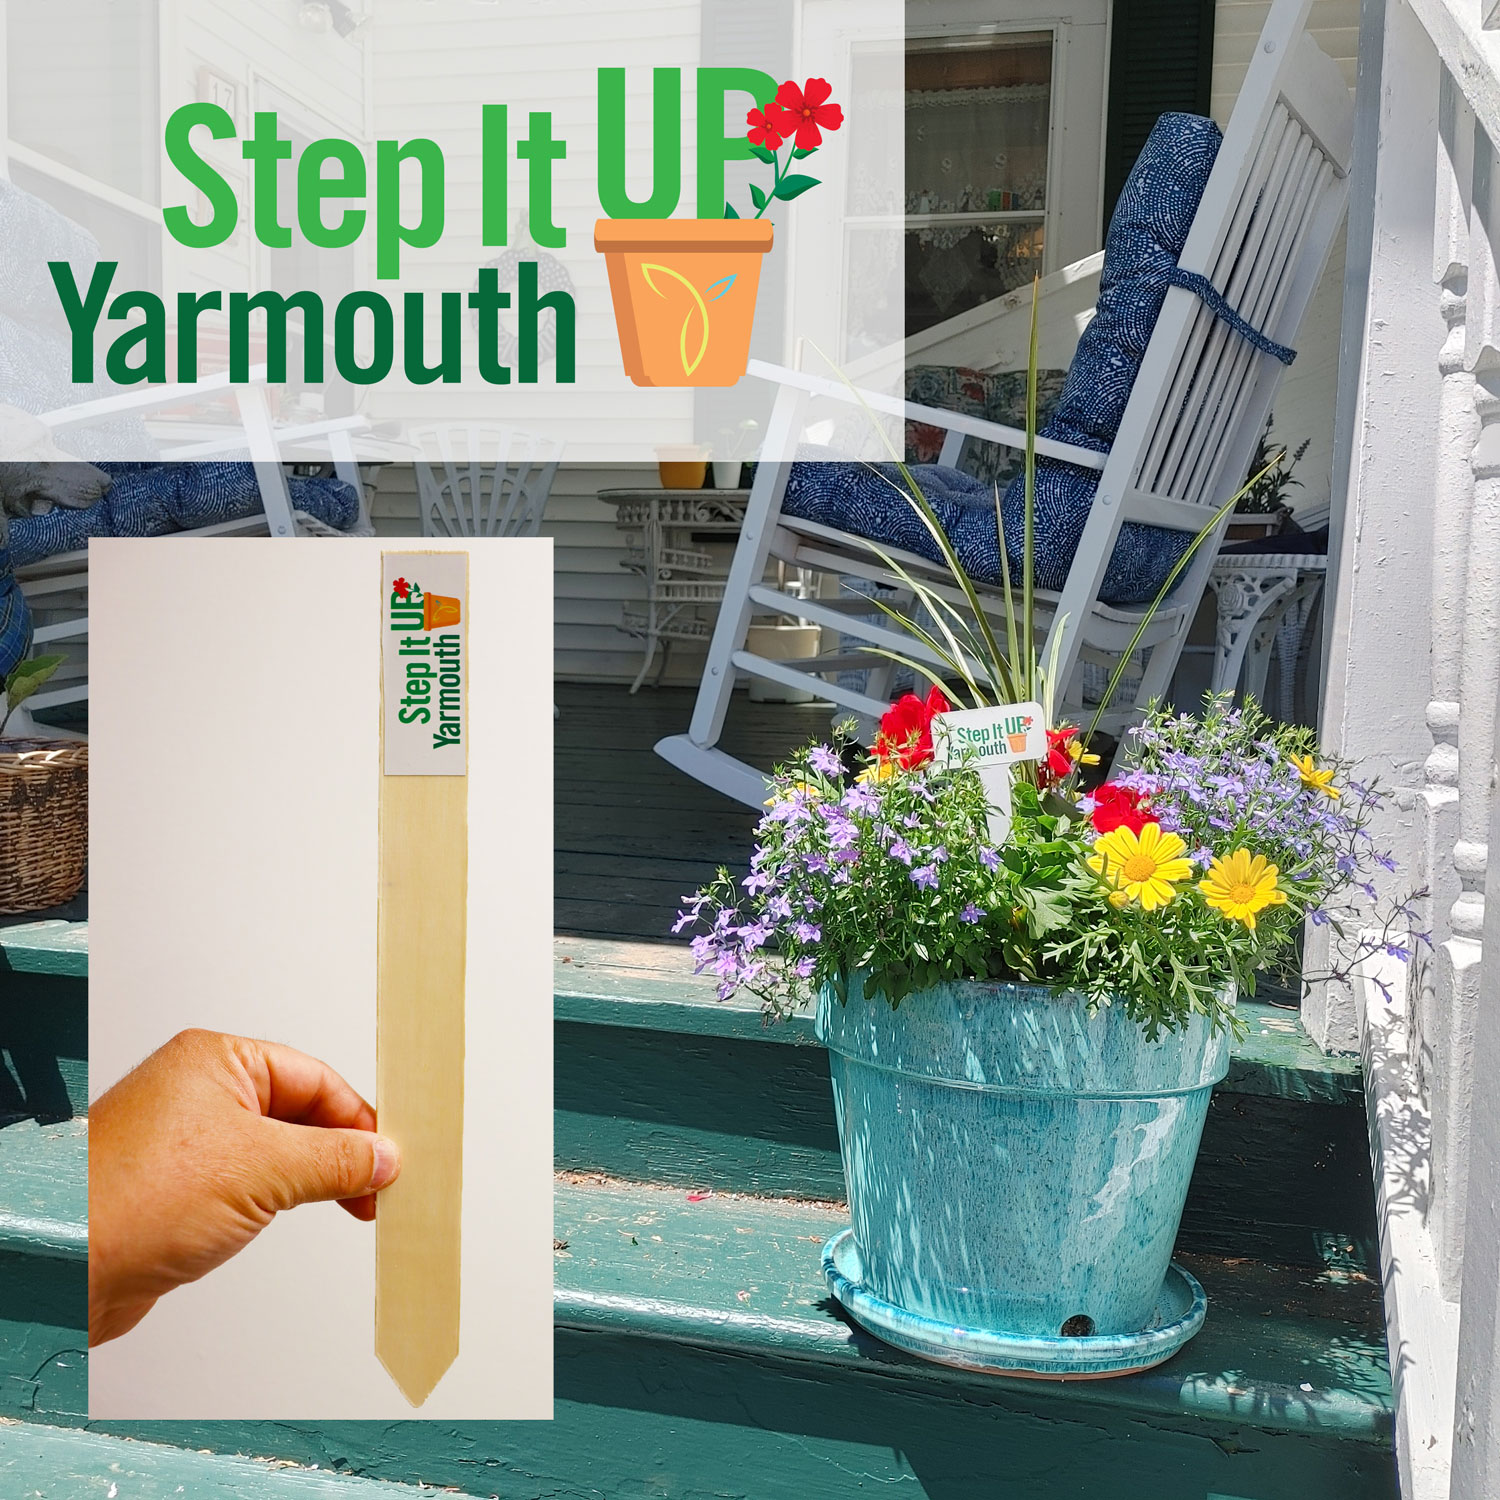 Step It Up Yarmouth image